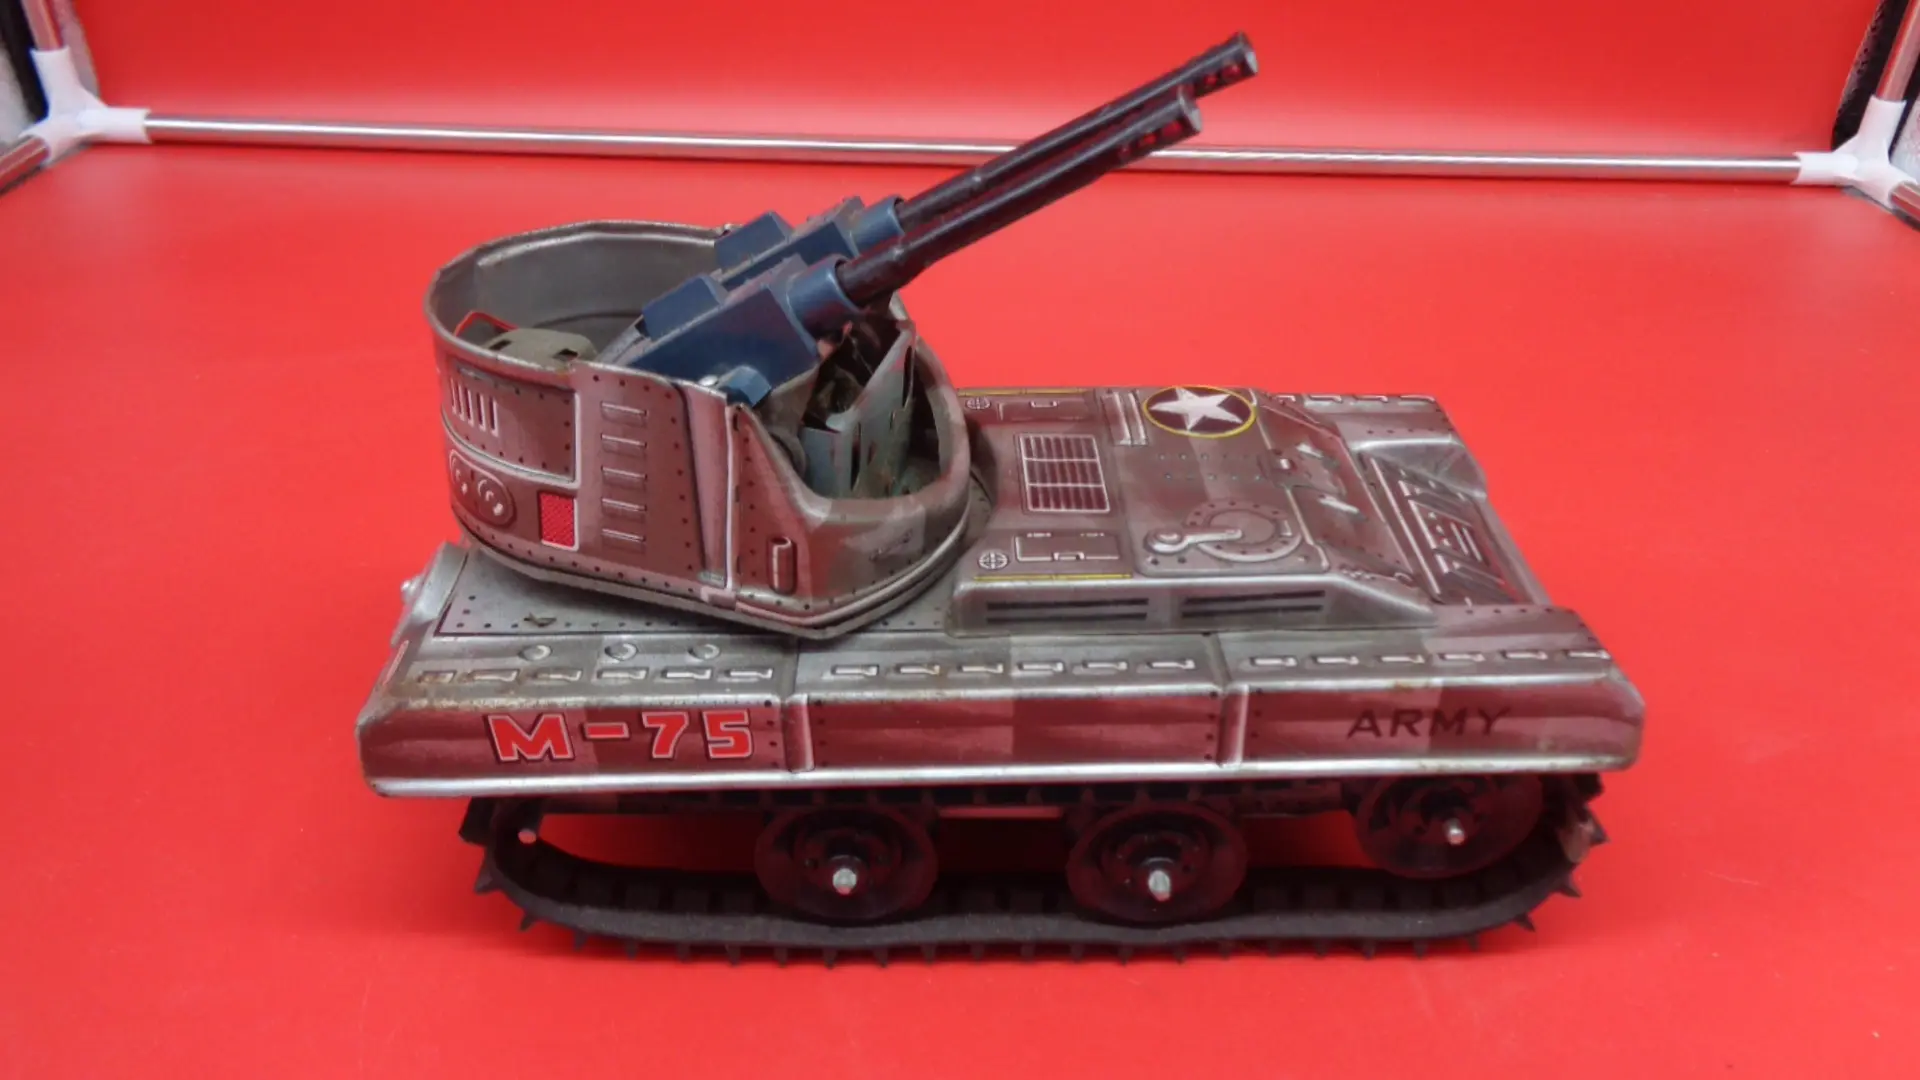 Vintage toy M-75 tank